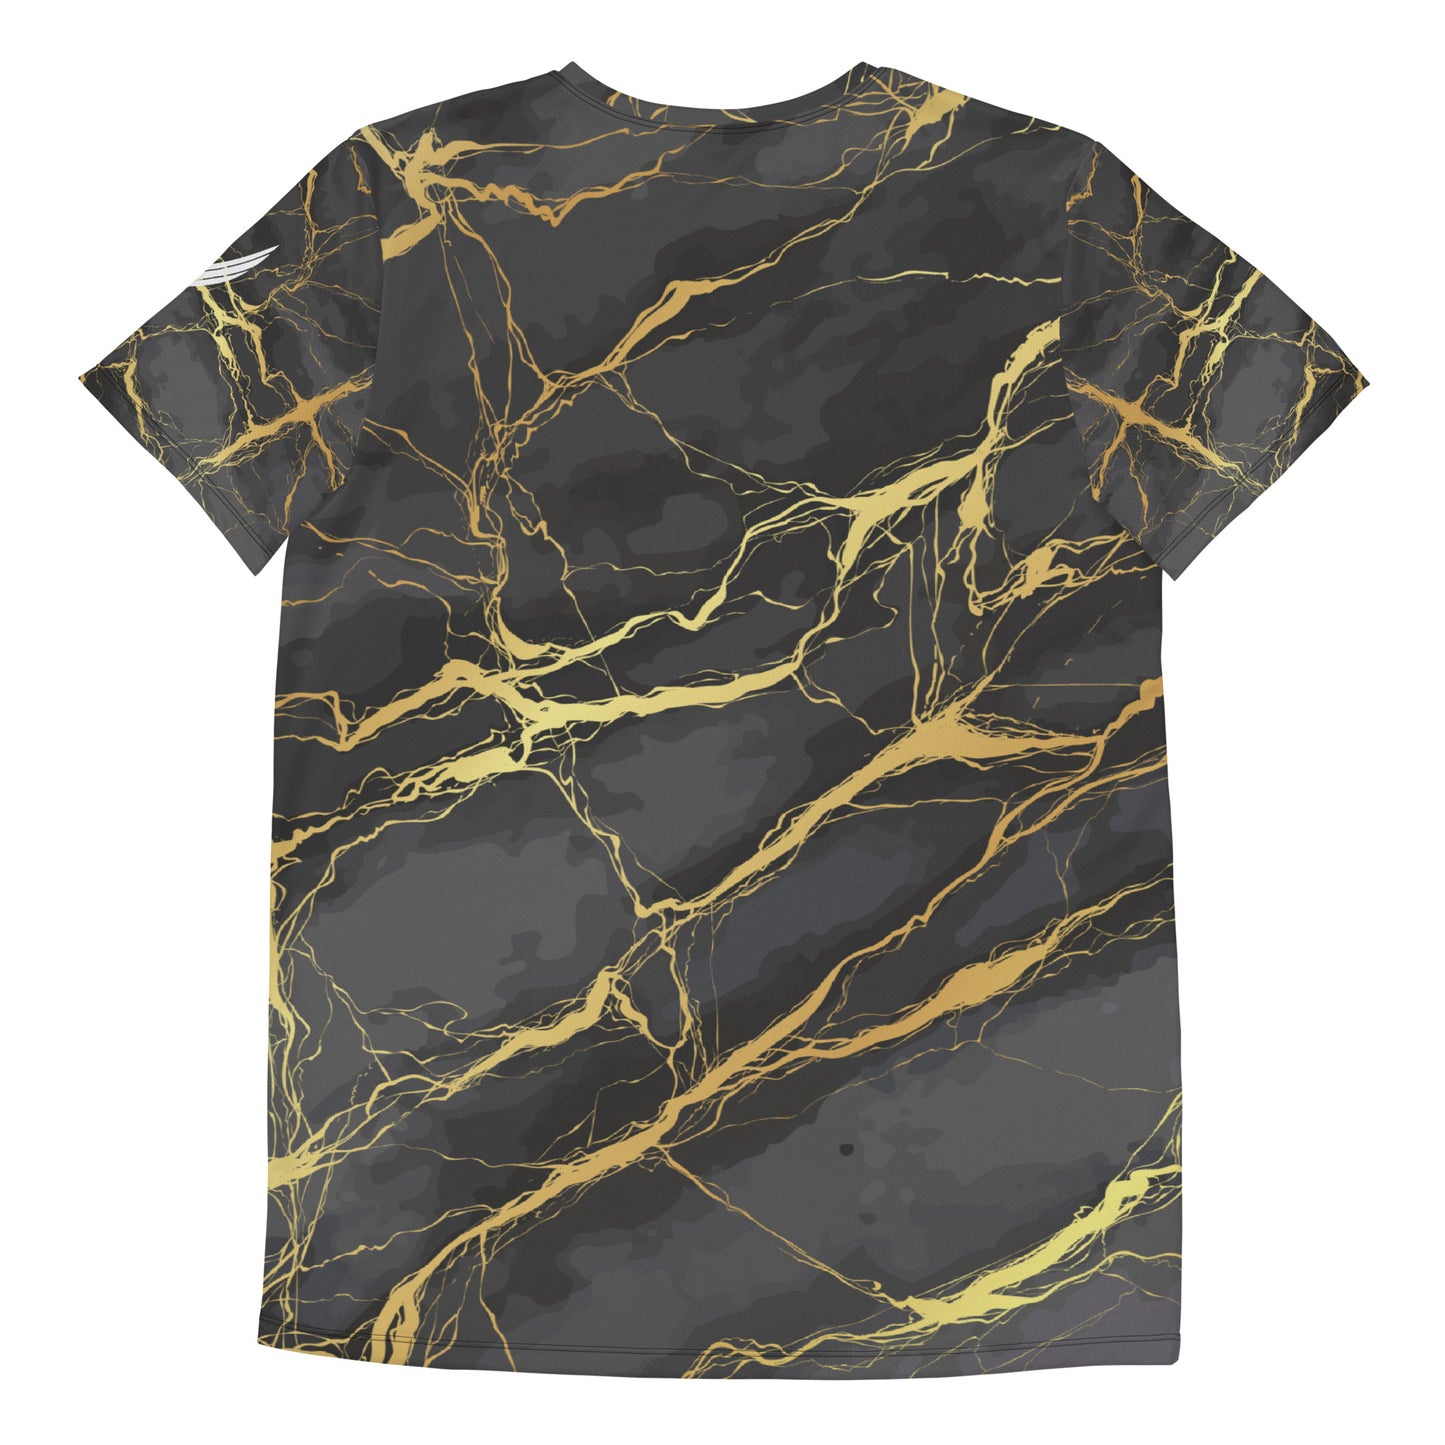 Voyager Gold Vein Short Sleeve Performance Shirt - Unisex